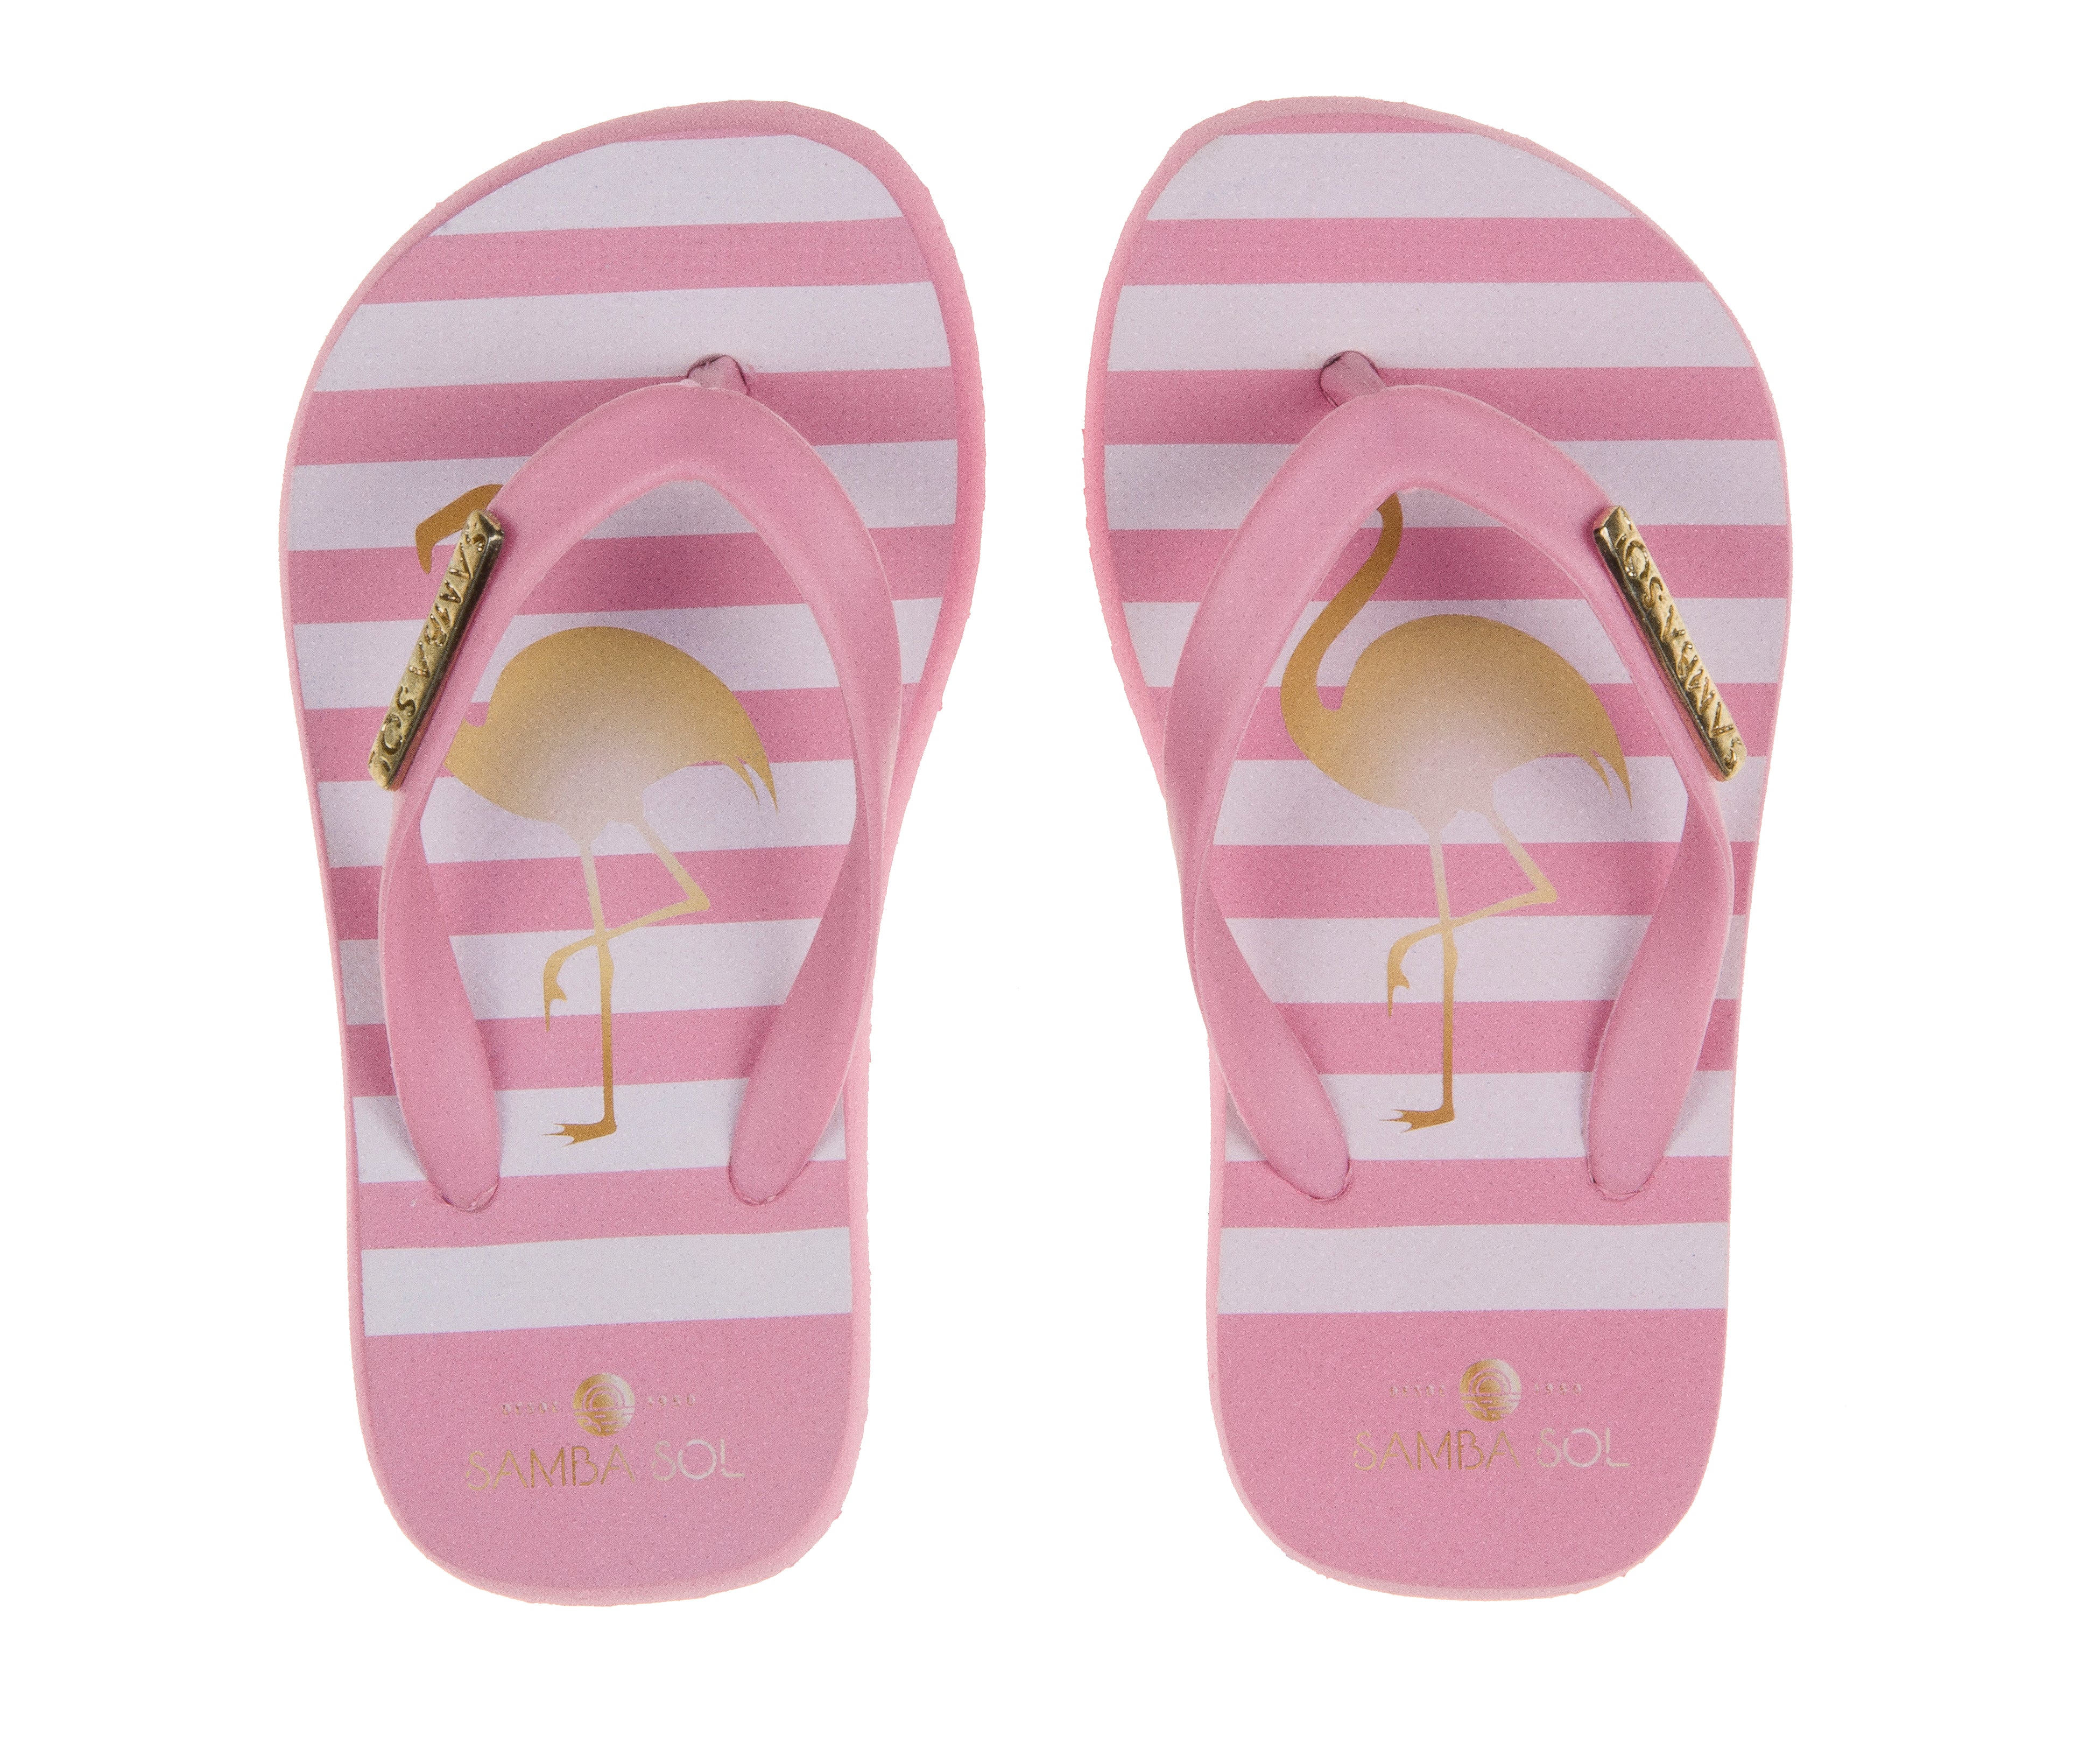 Samba Sol Kid's Fashion Collection Flip Flops - Flamingo